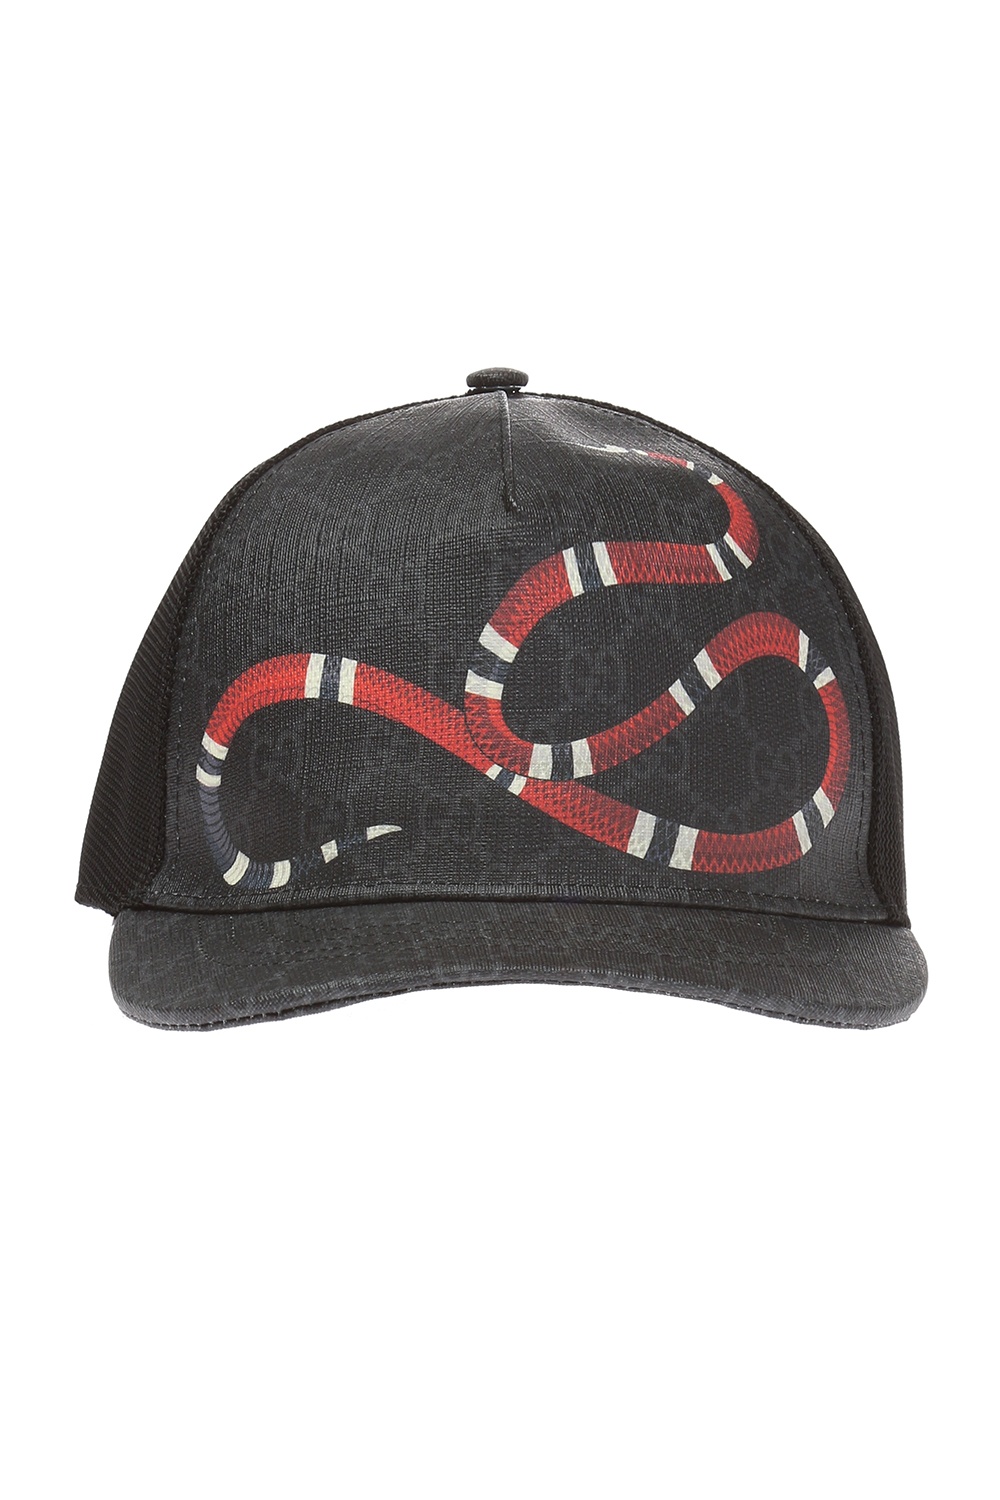 Gucci GG Supreme Baseball Hat, Size S, Black